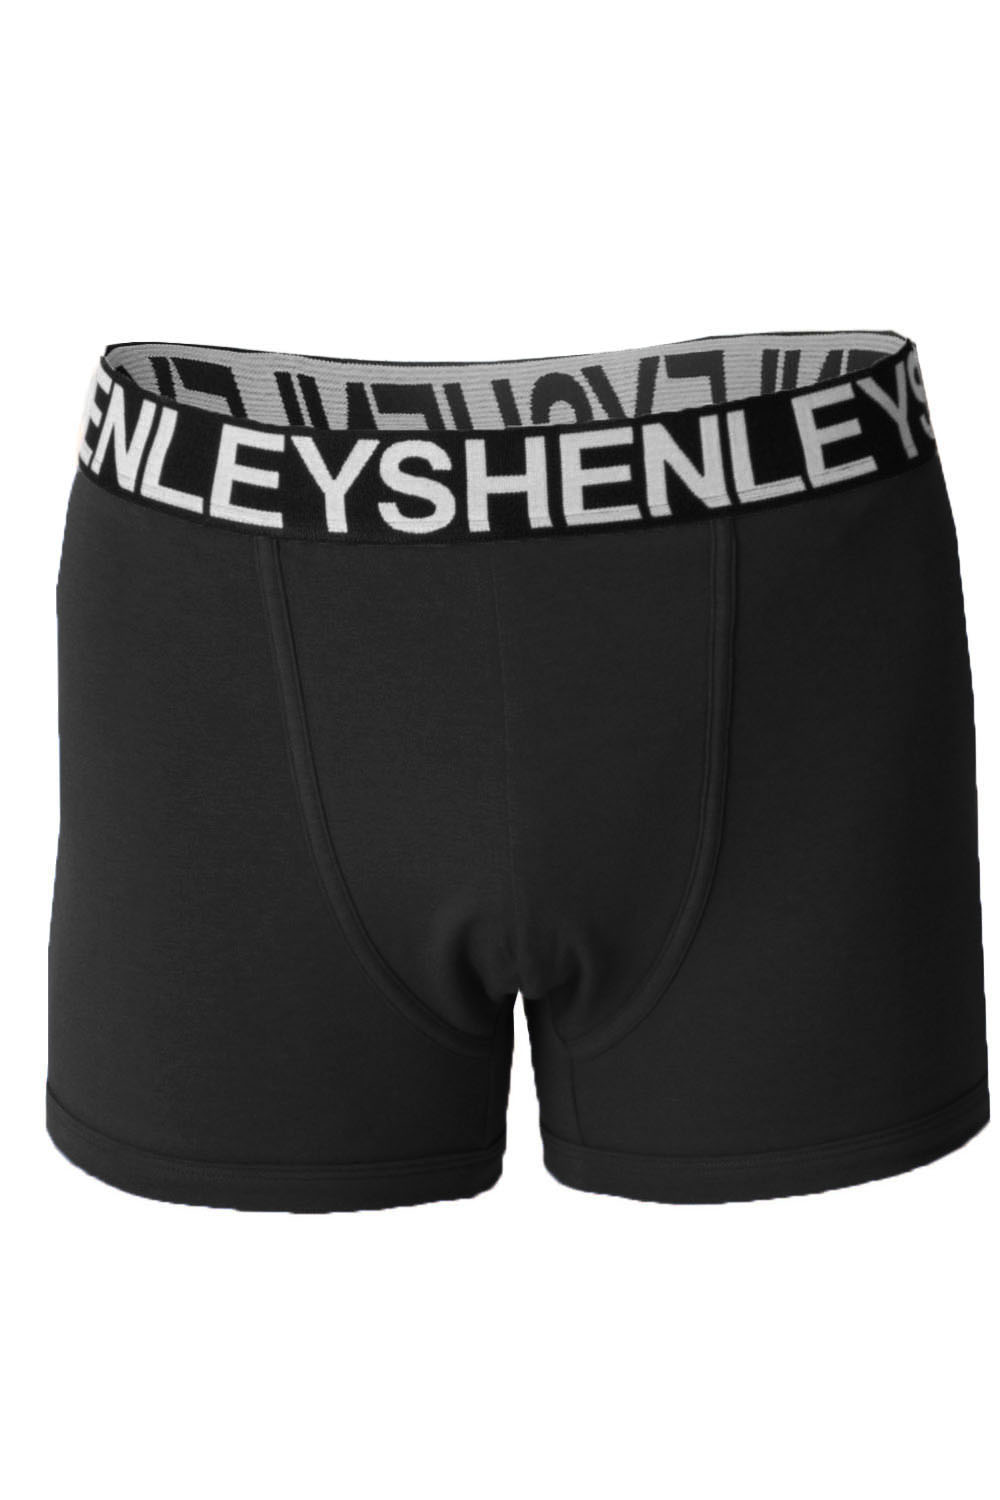 Henleys Mens 3 Pack Boxer Shorts Designer Cotton Jersey Stretch Trunks ...